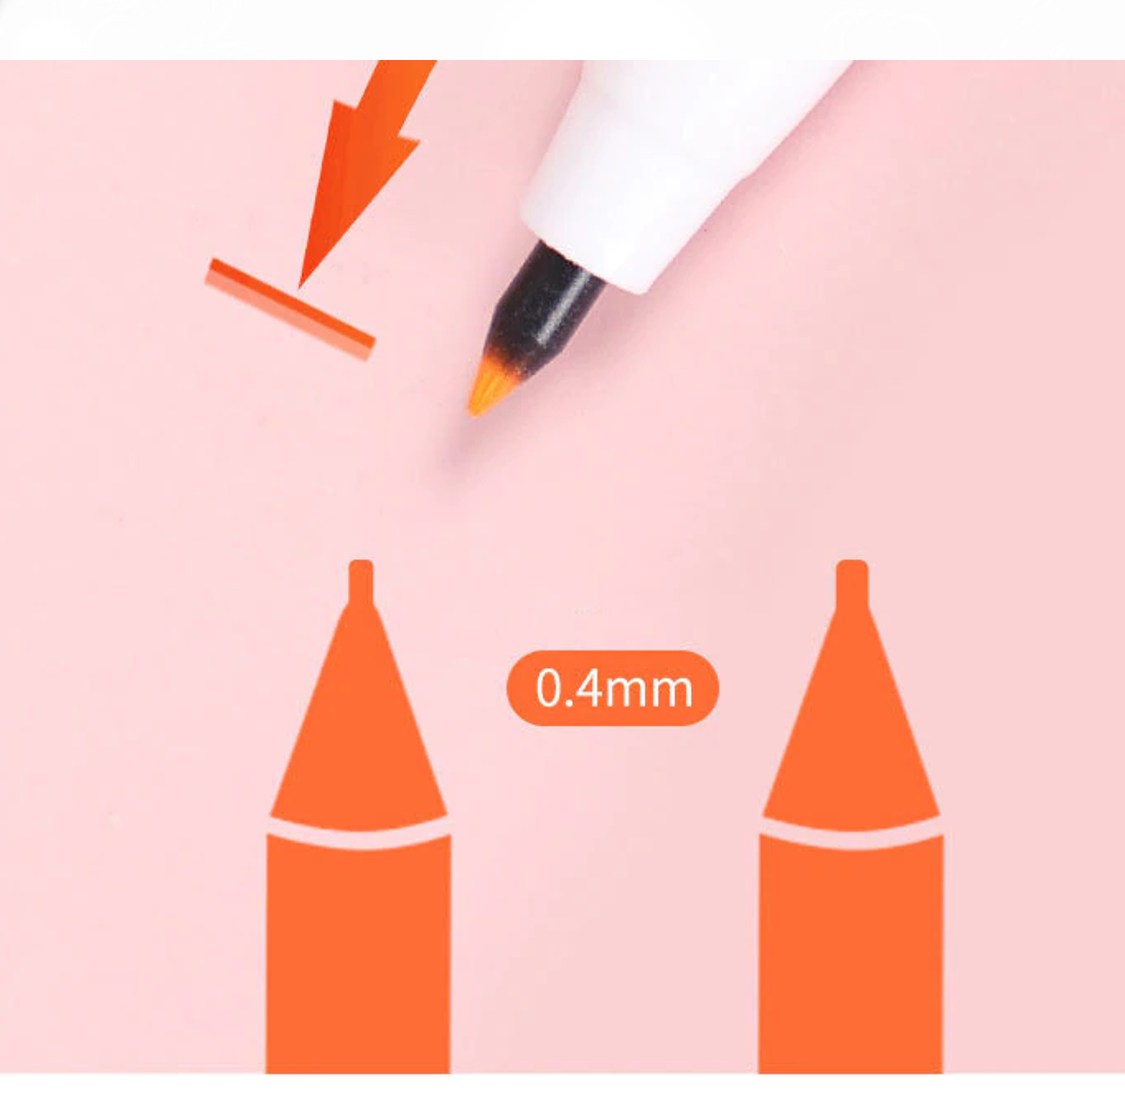 Monami Plus Pen 3000 x 60 unidades